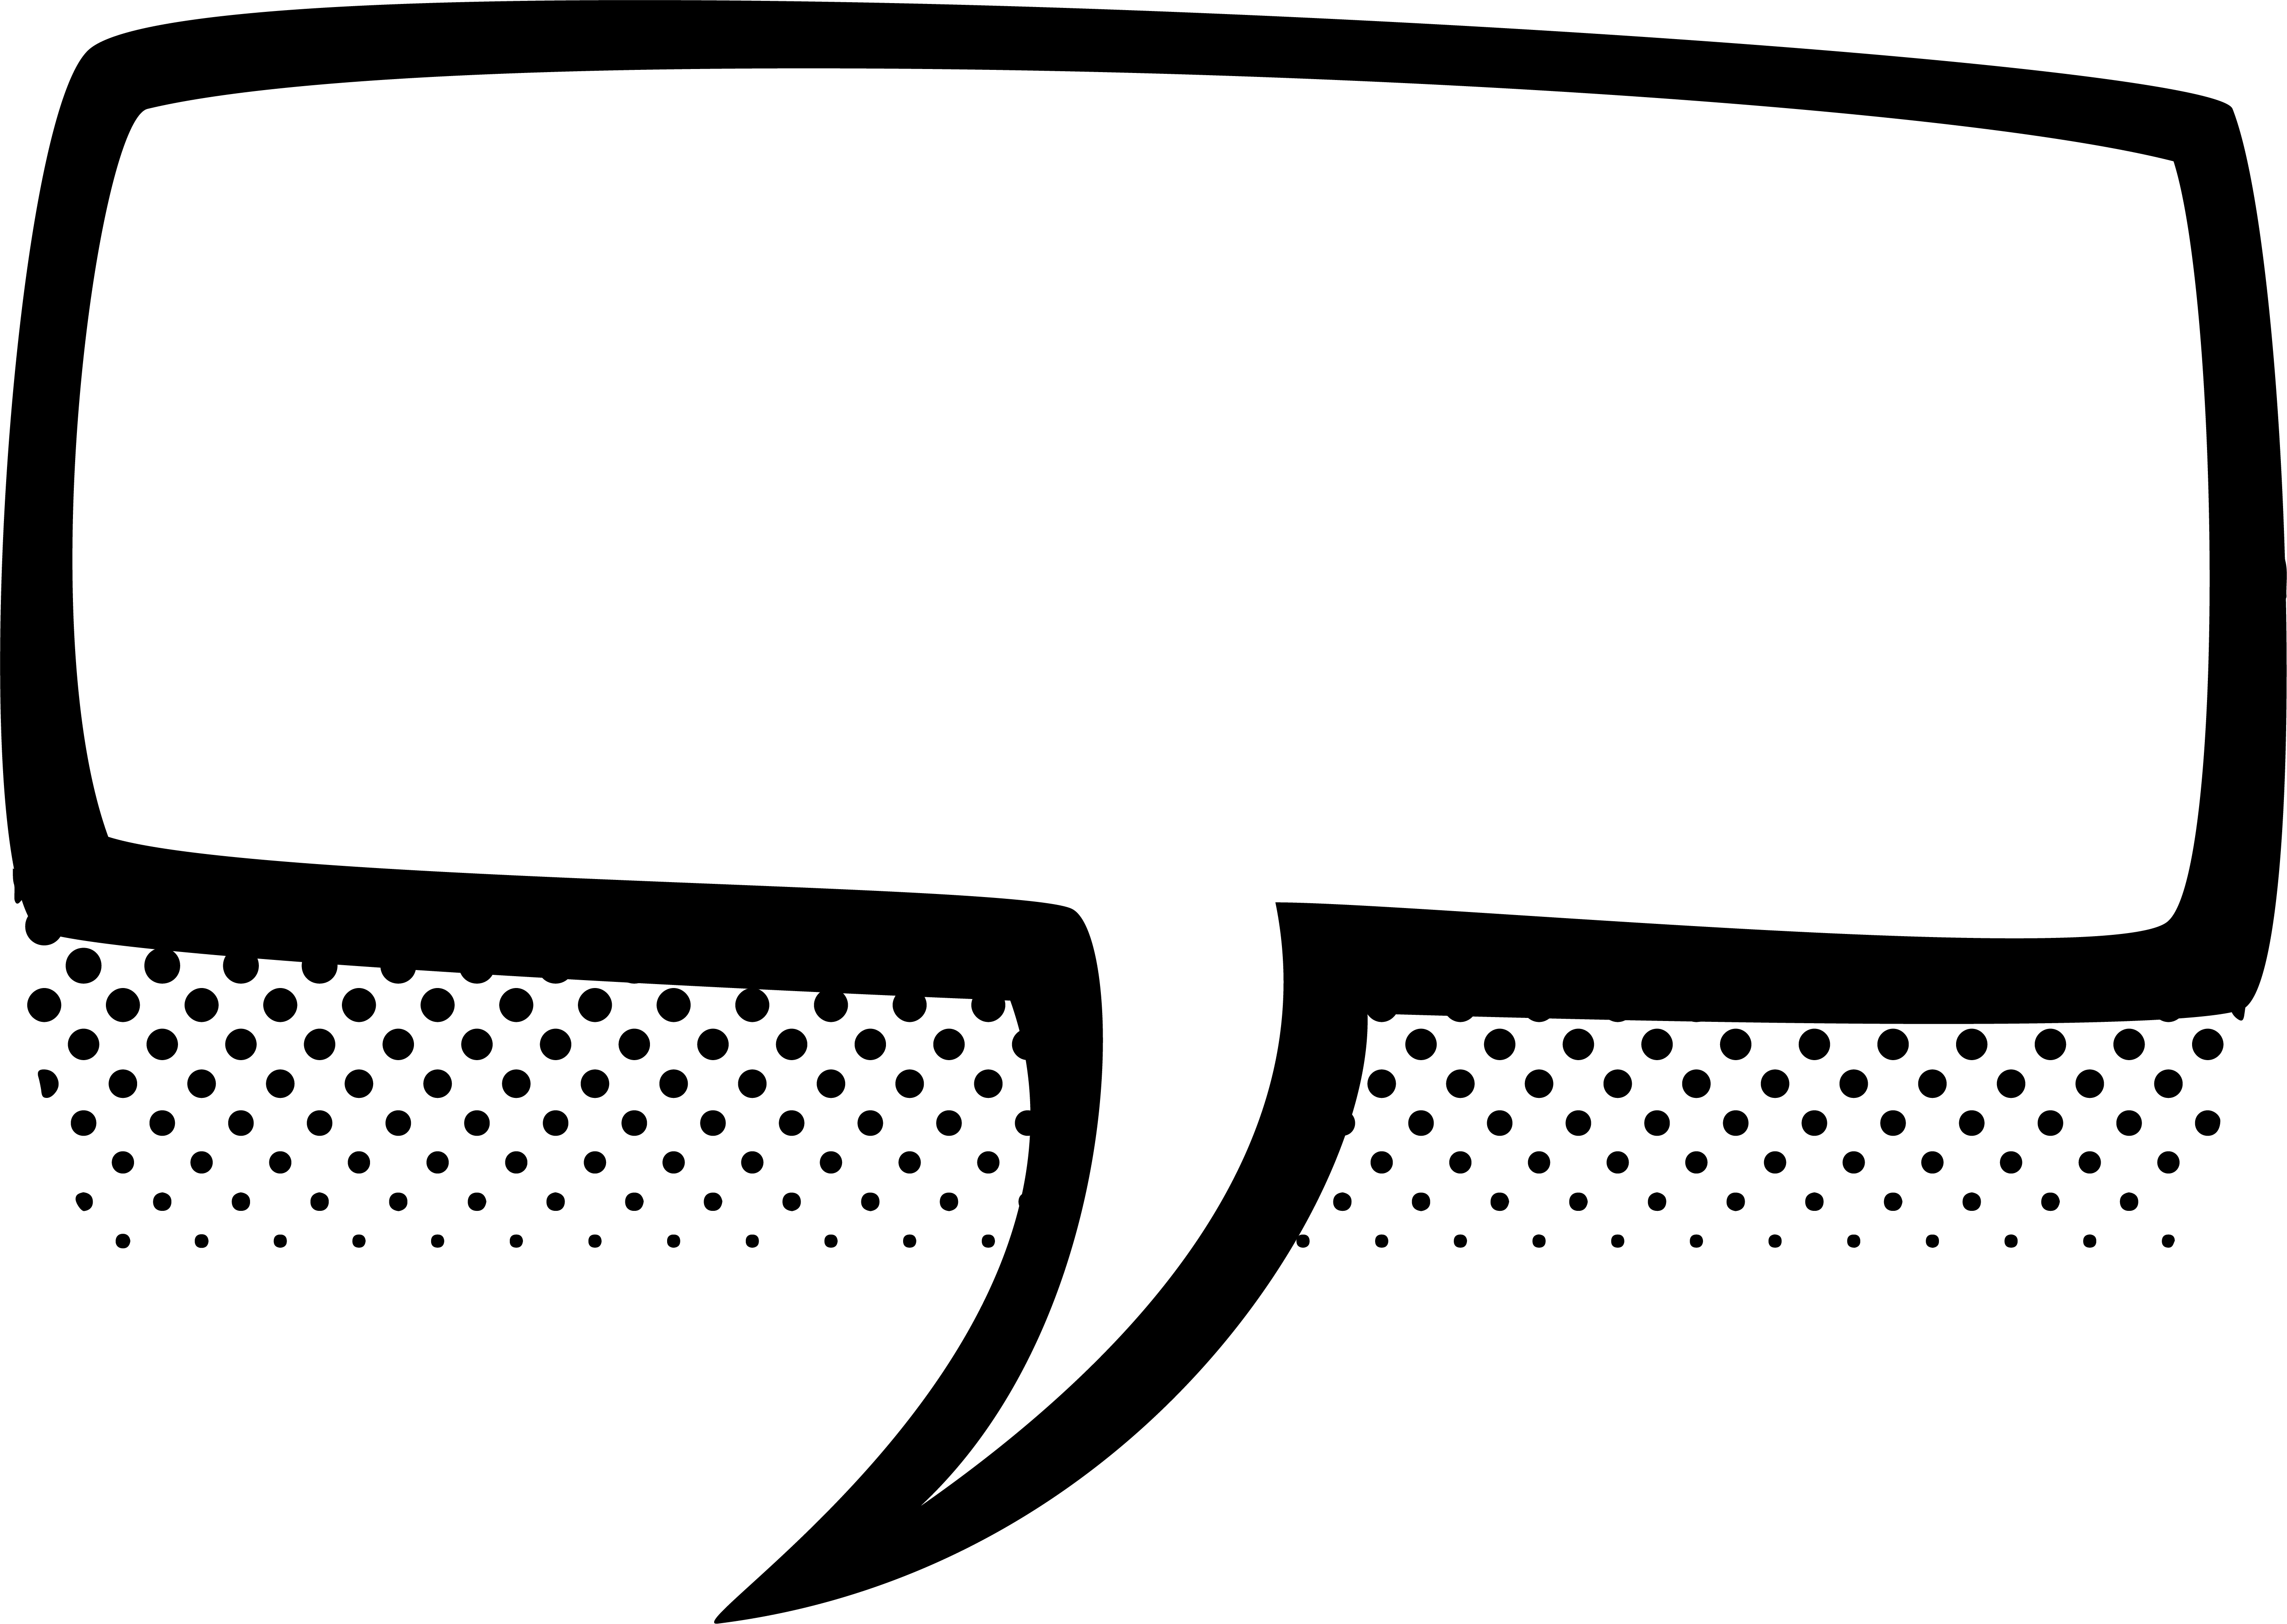 A White Speech Bubble On A Black Background